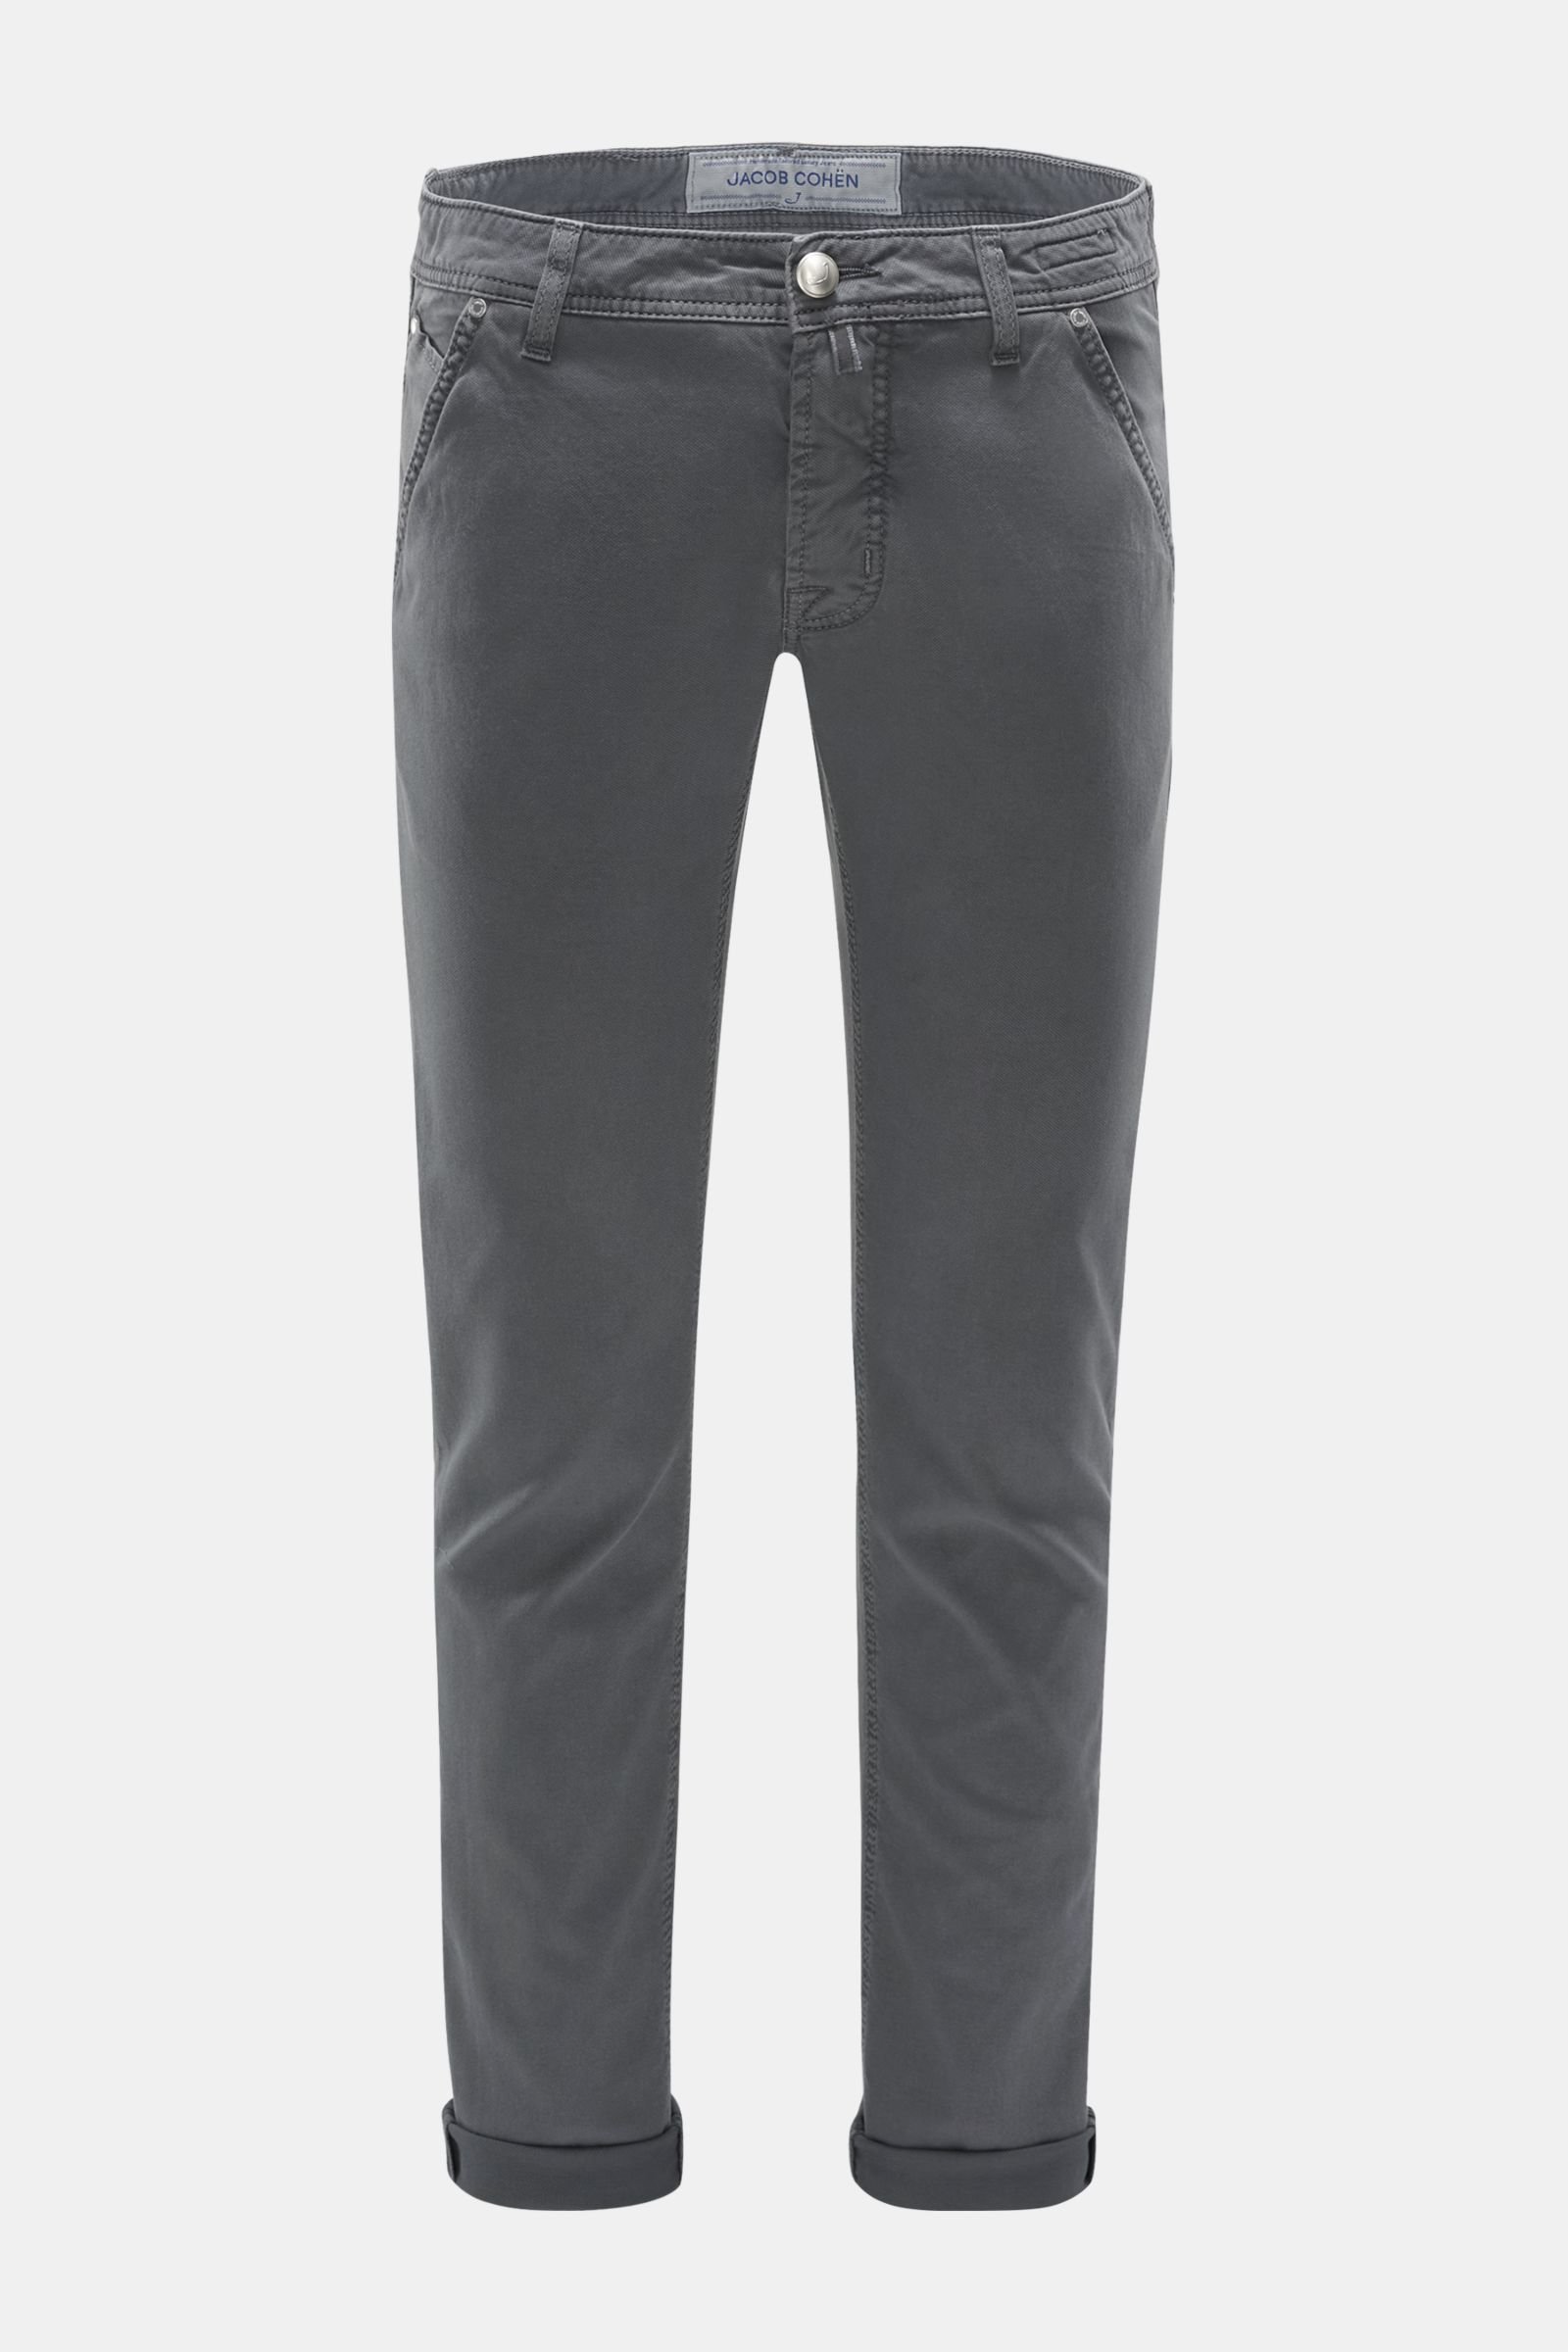 Cotton trousers 'J613 Comfort Slim Fit' grey